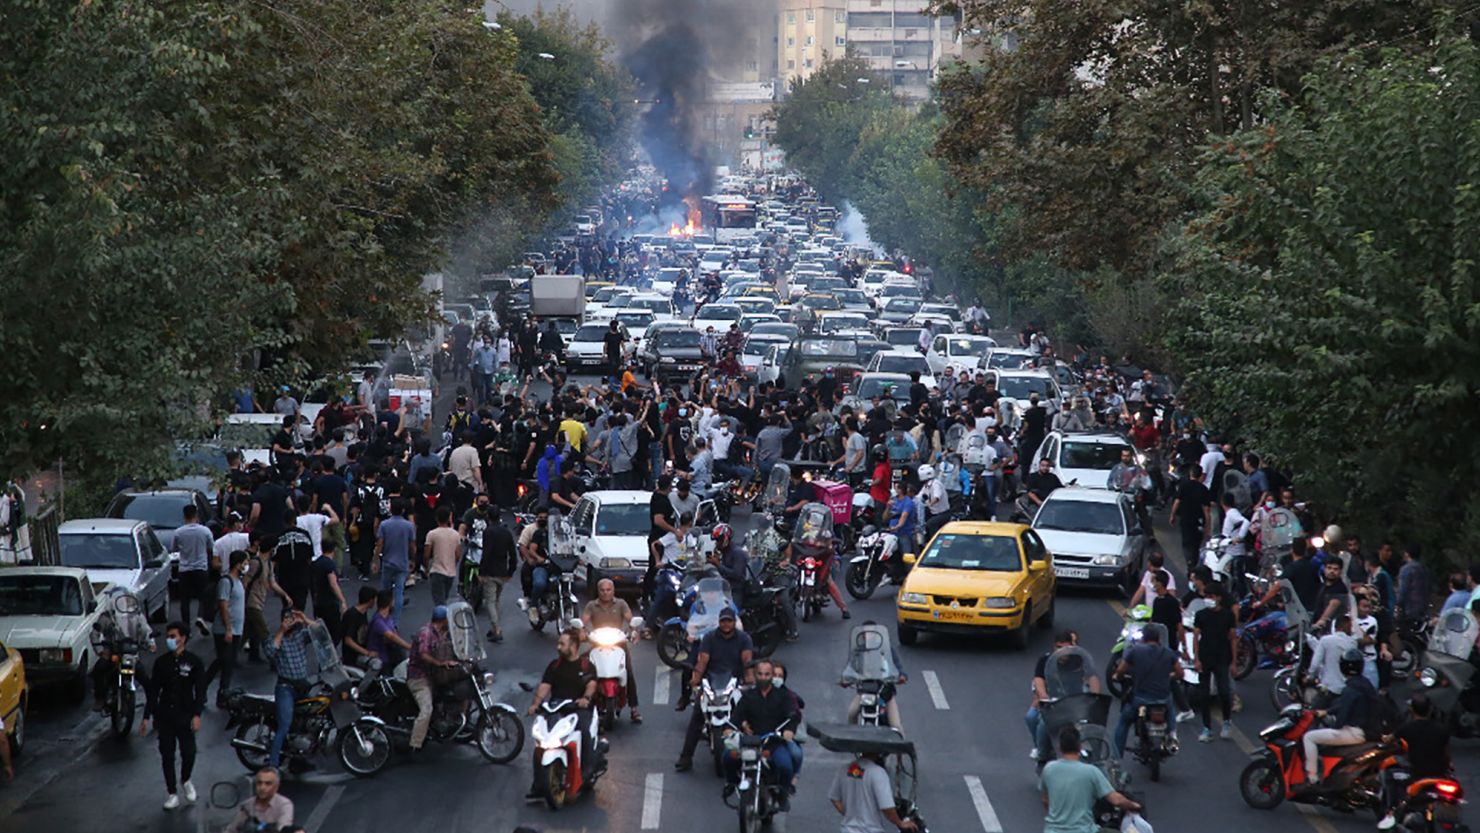 https://media.cnn.com/api/v1/images/stellar/prod/221114113246-iran-protests-mime.jpg?c=16x9&q=h_833,w_1480,c_fill